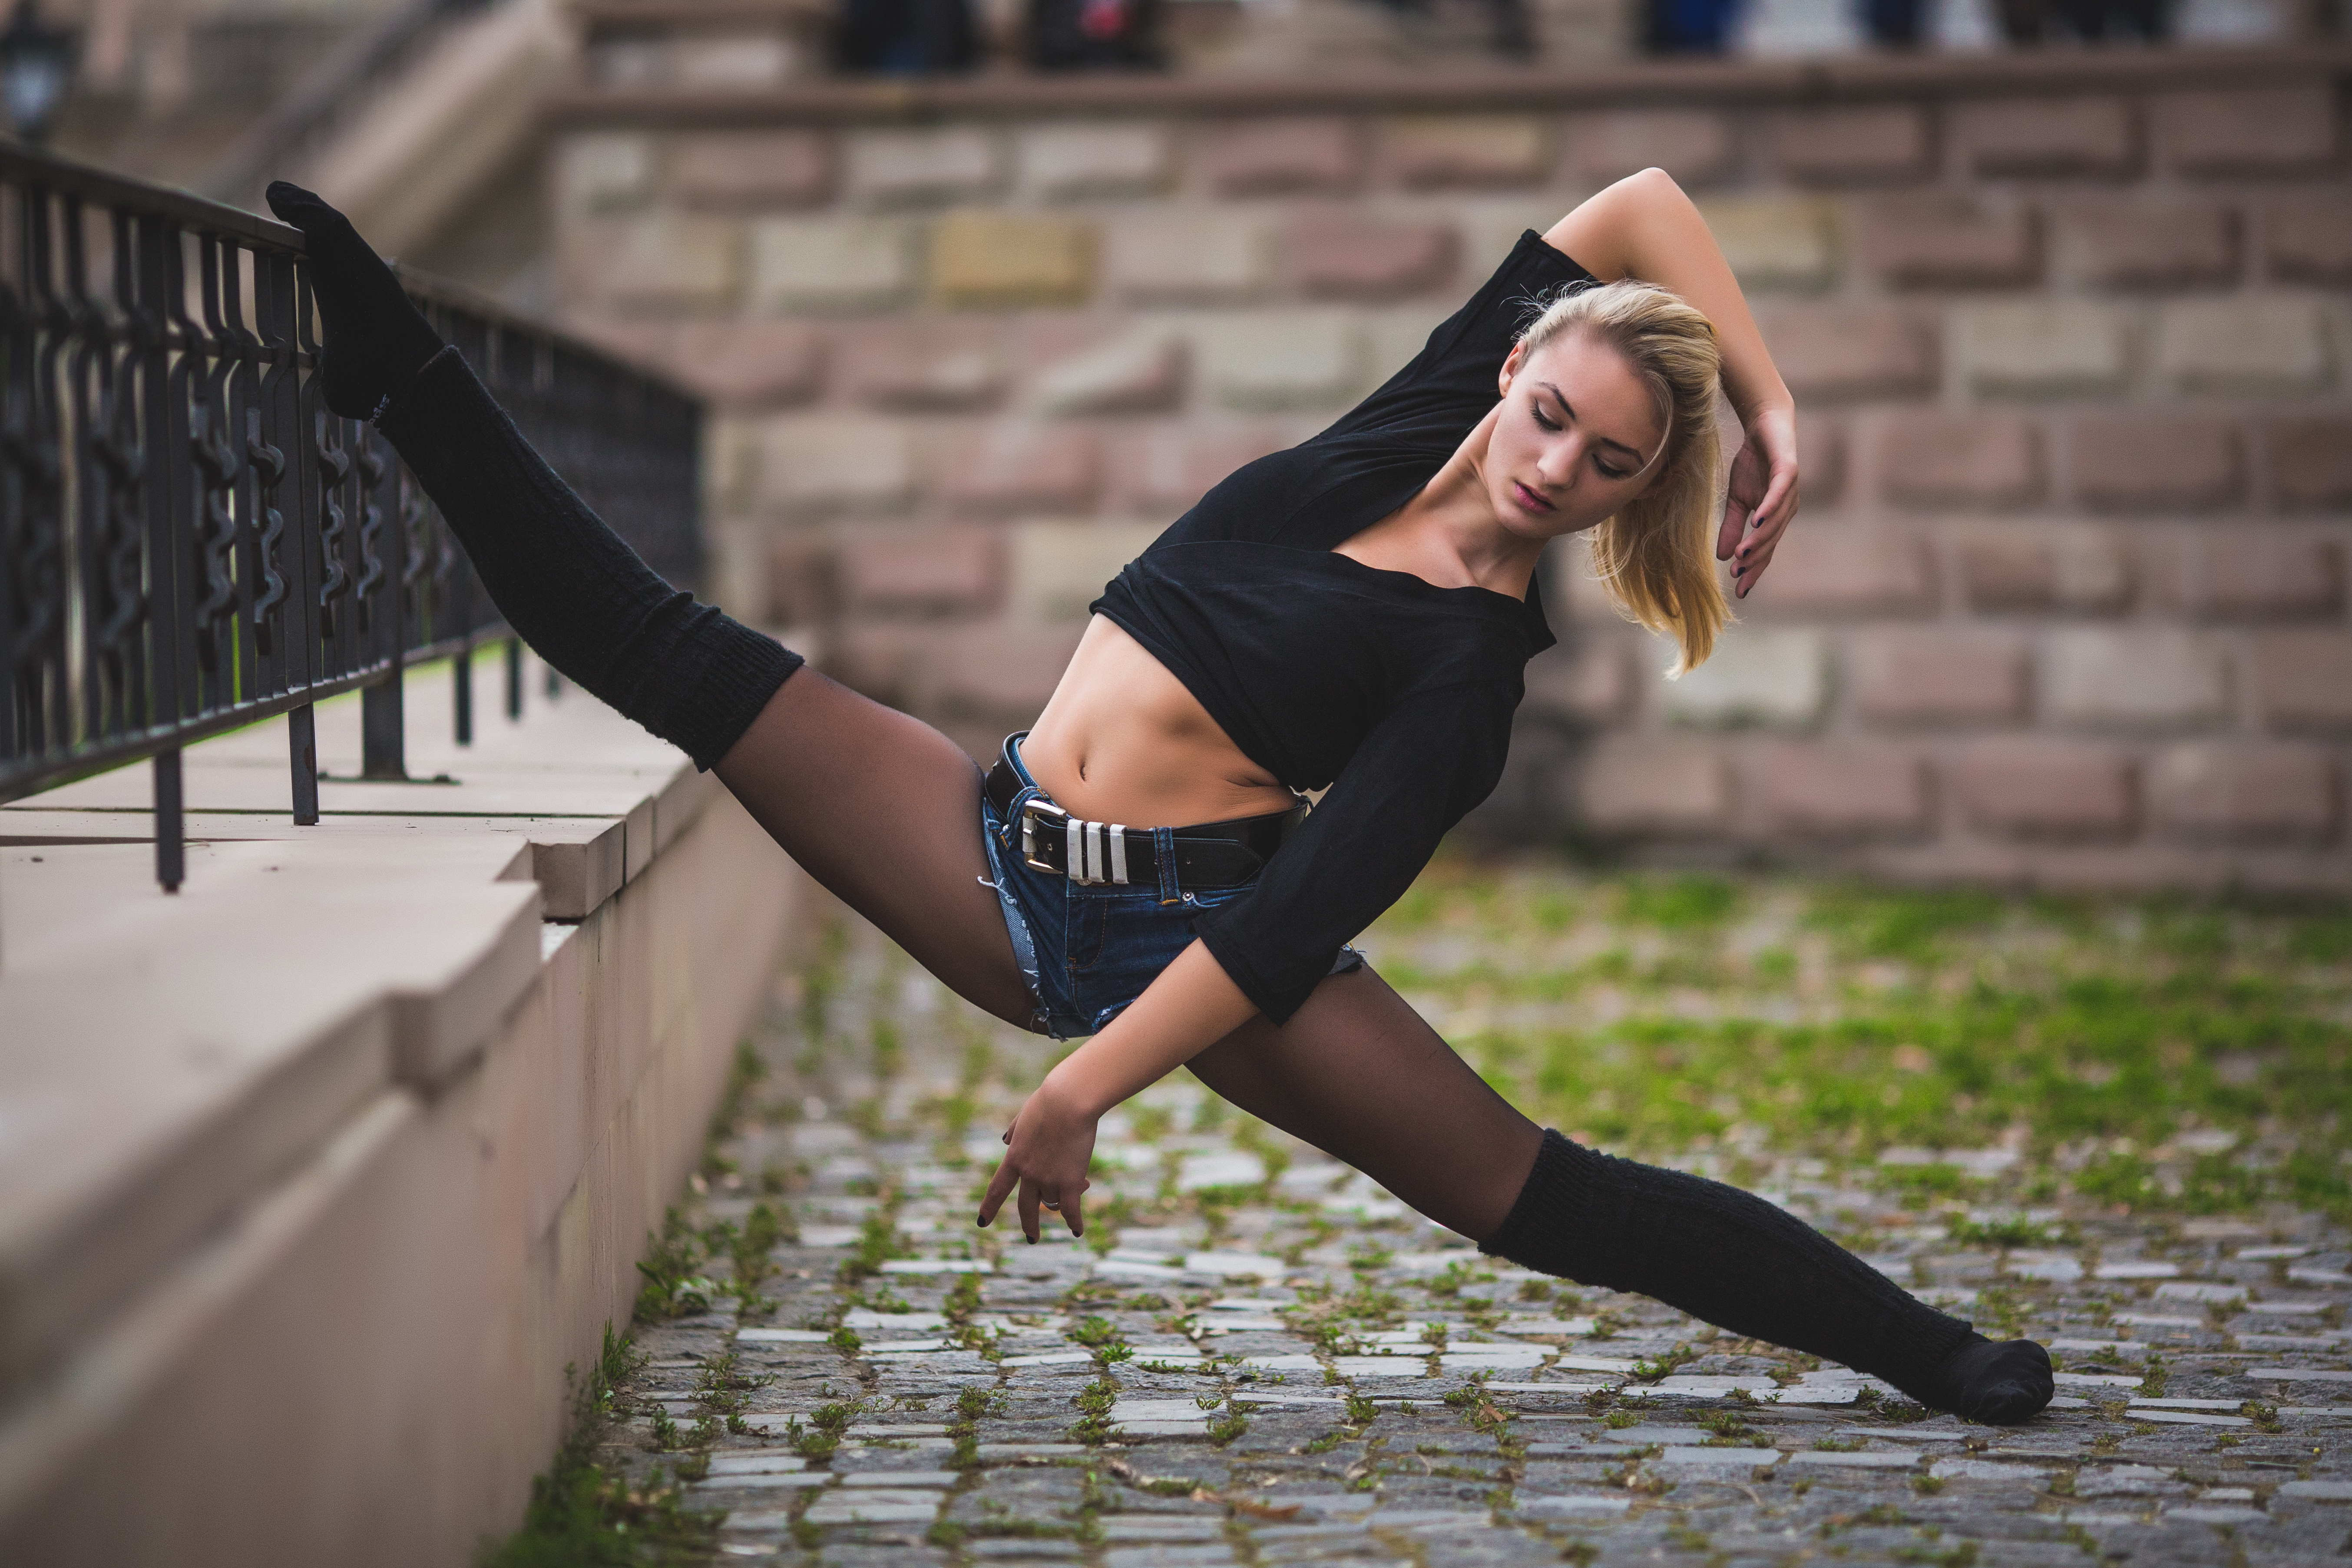 beautiful Ballet dancer or acrobatic dance outdoors in the street